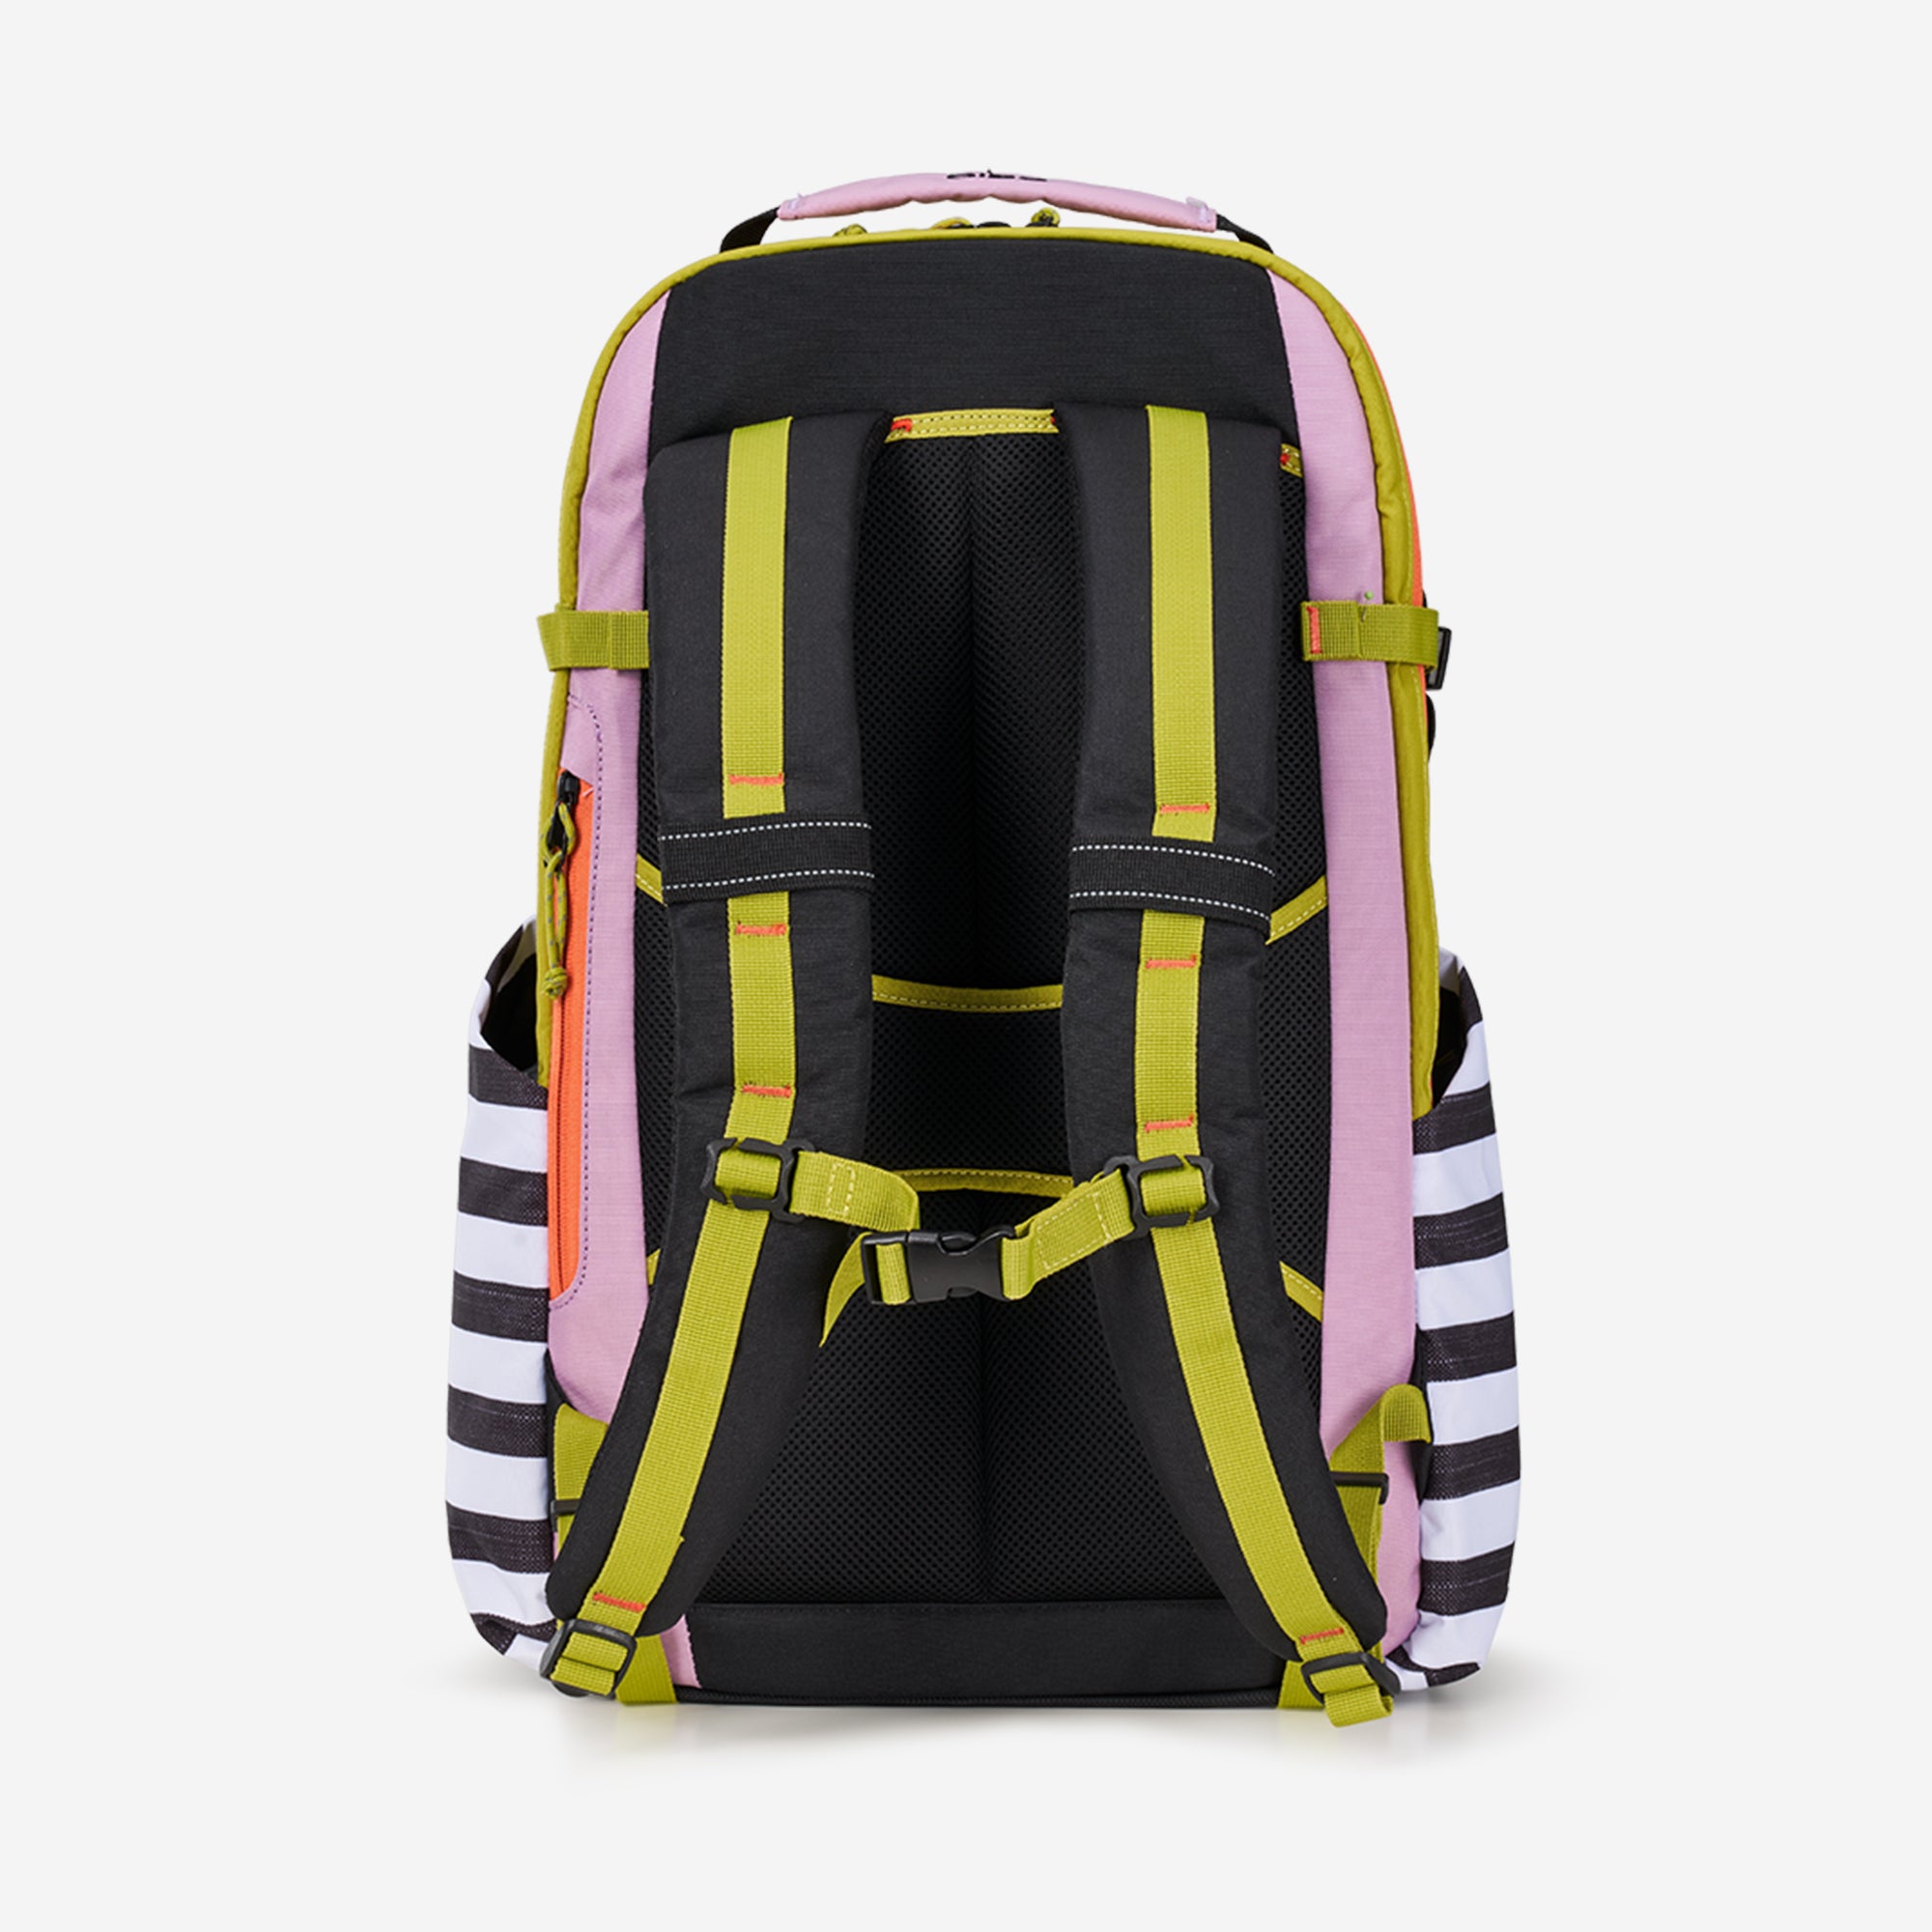 Review: Langly Alpha Pro Backpack Camera Bag